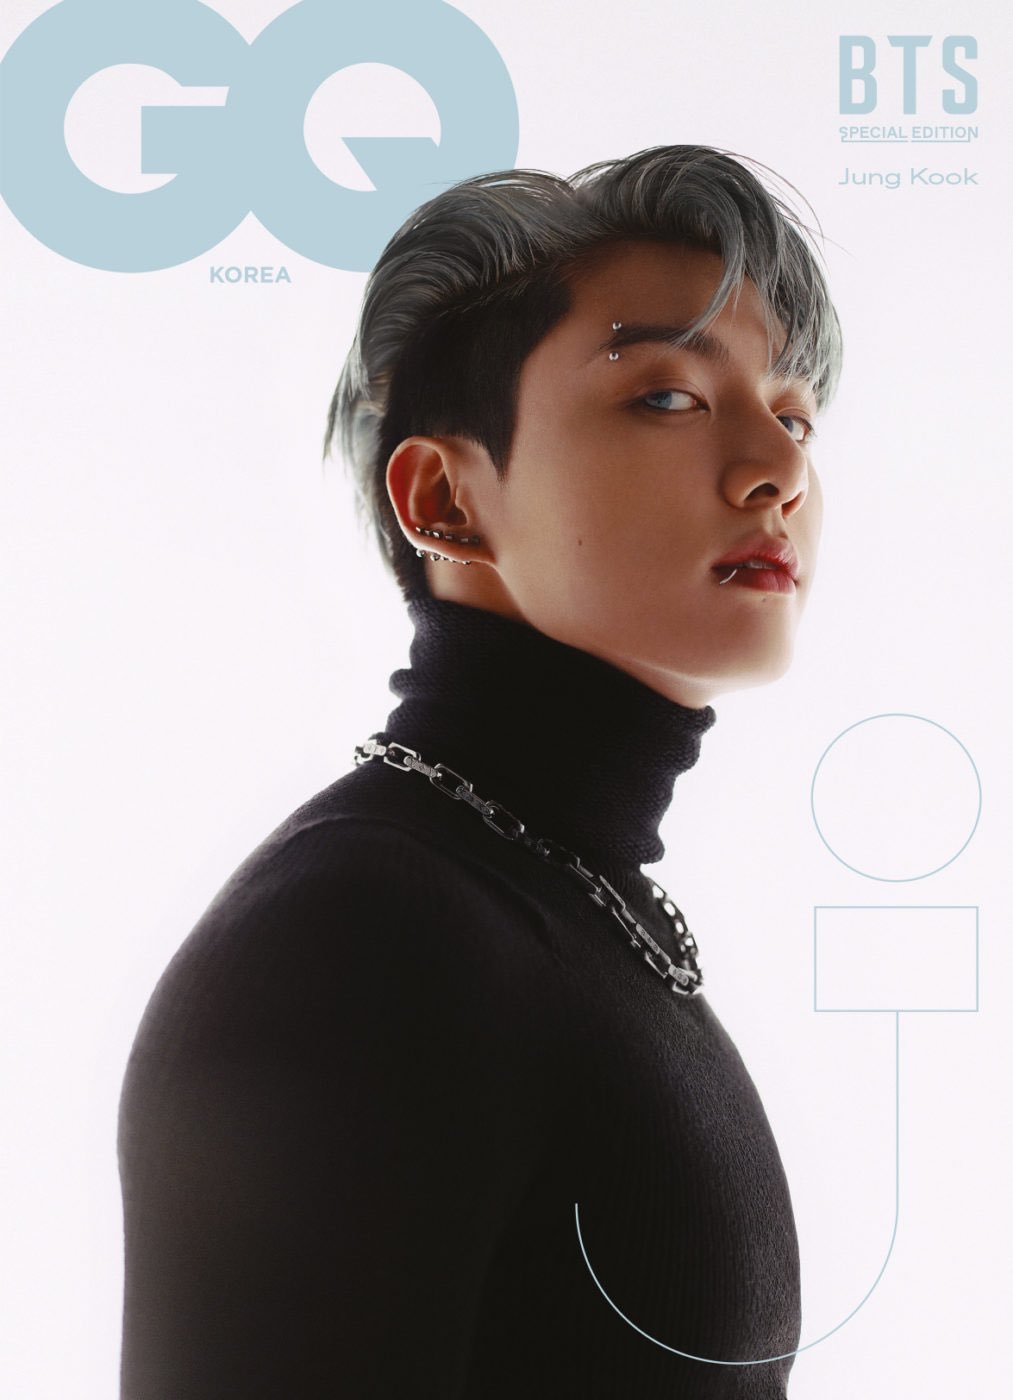 VOGUE Korea x GQ Korea - BTS January 2022 Issue Magazine - BTS [JUNGKOOK]